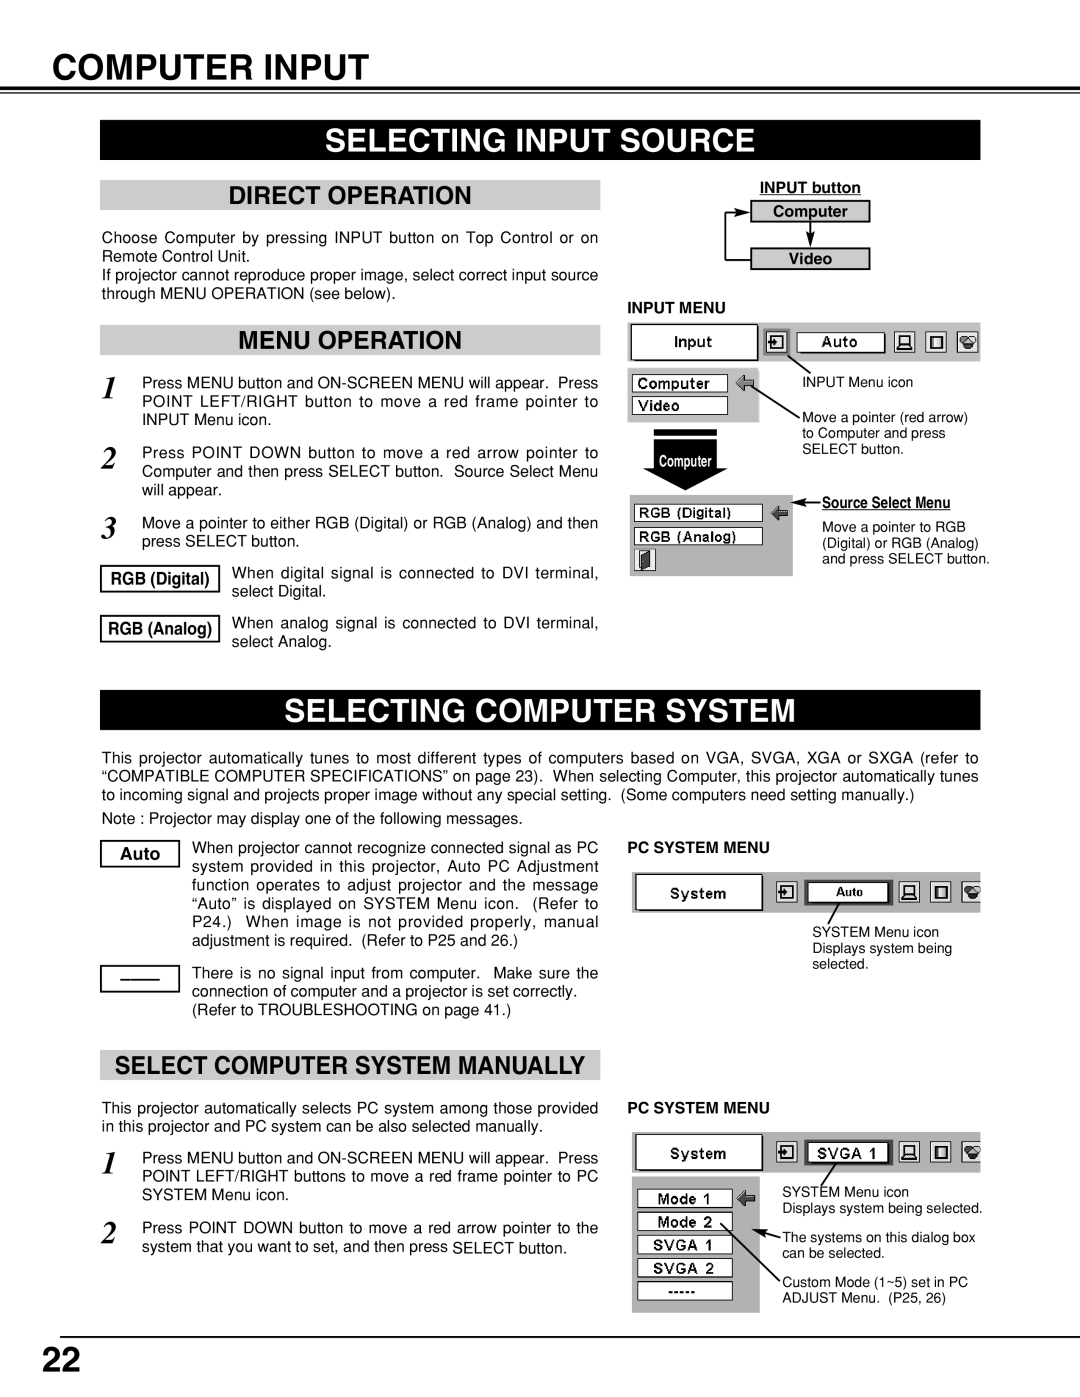 BOXLIGHT CP-19t manual Computer Input, Selecting Input Source, Selecting Computer System, Select Computer System Manually 